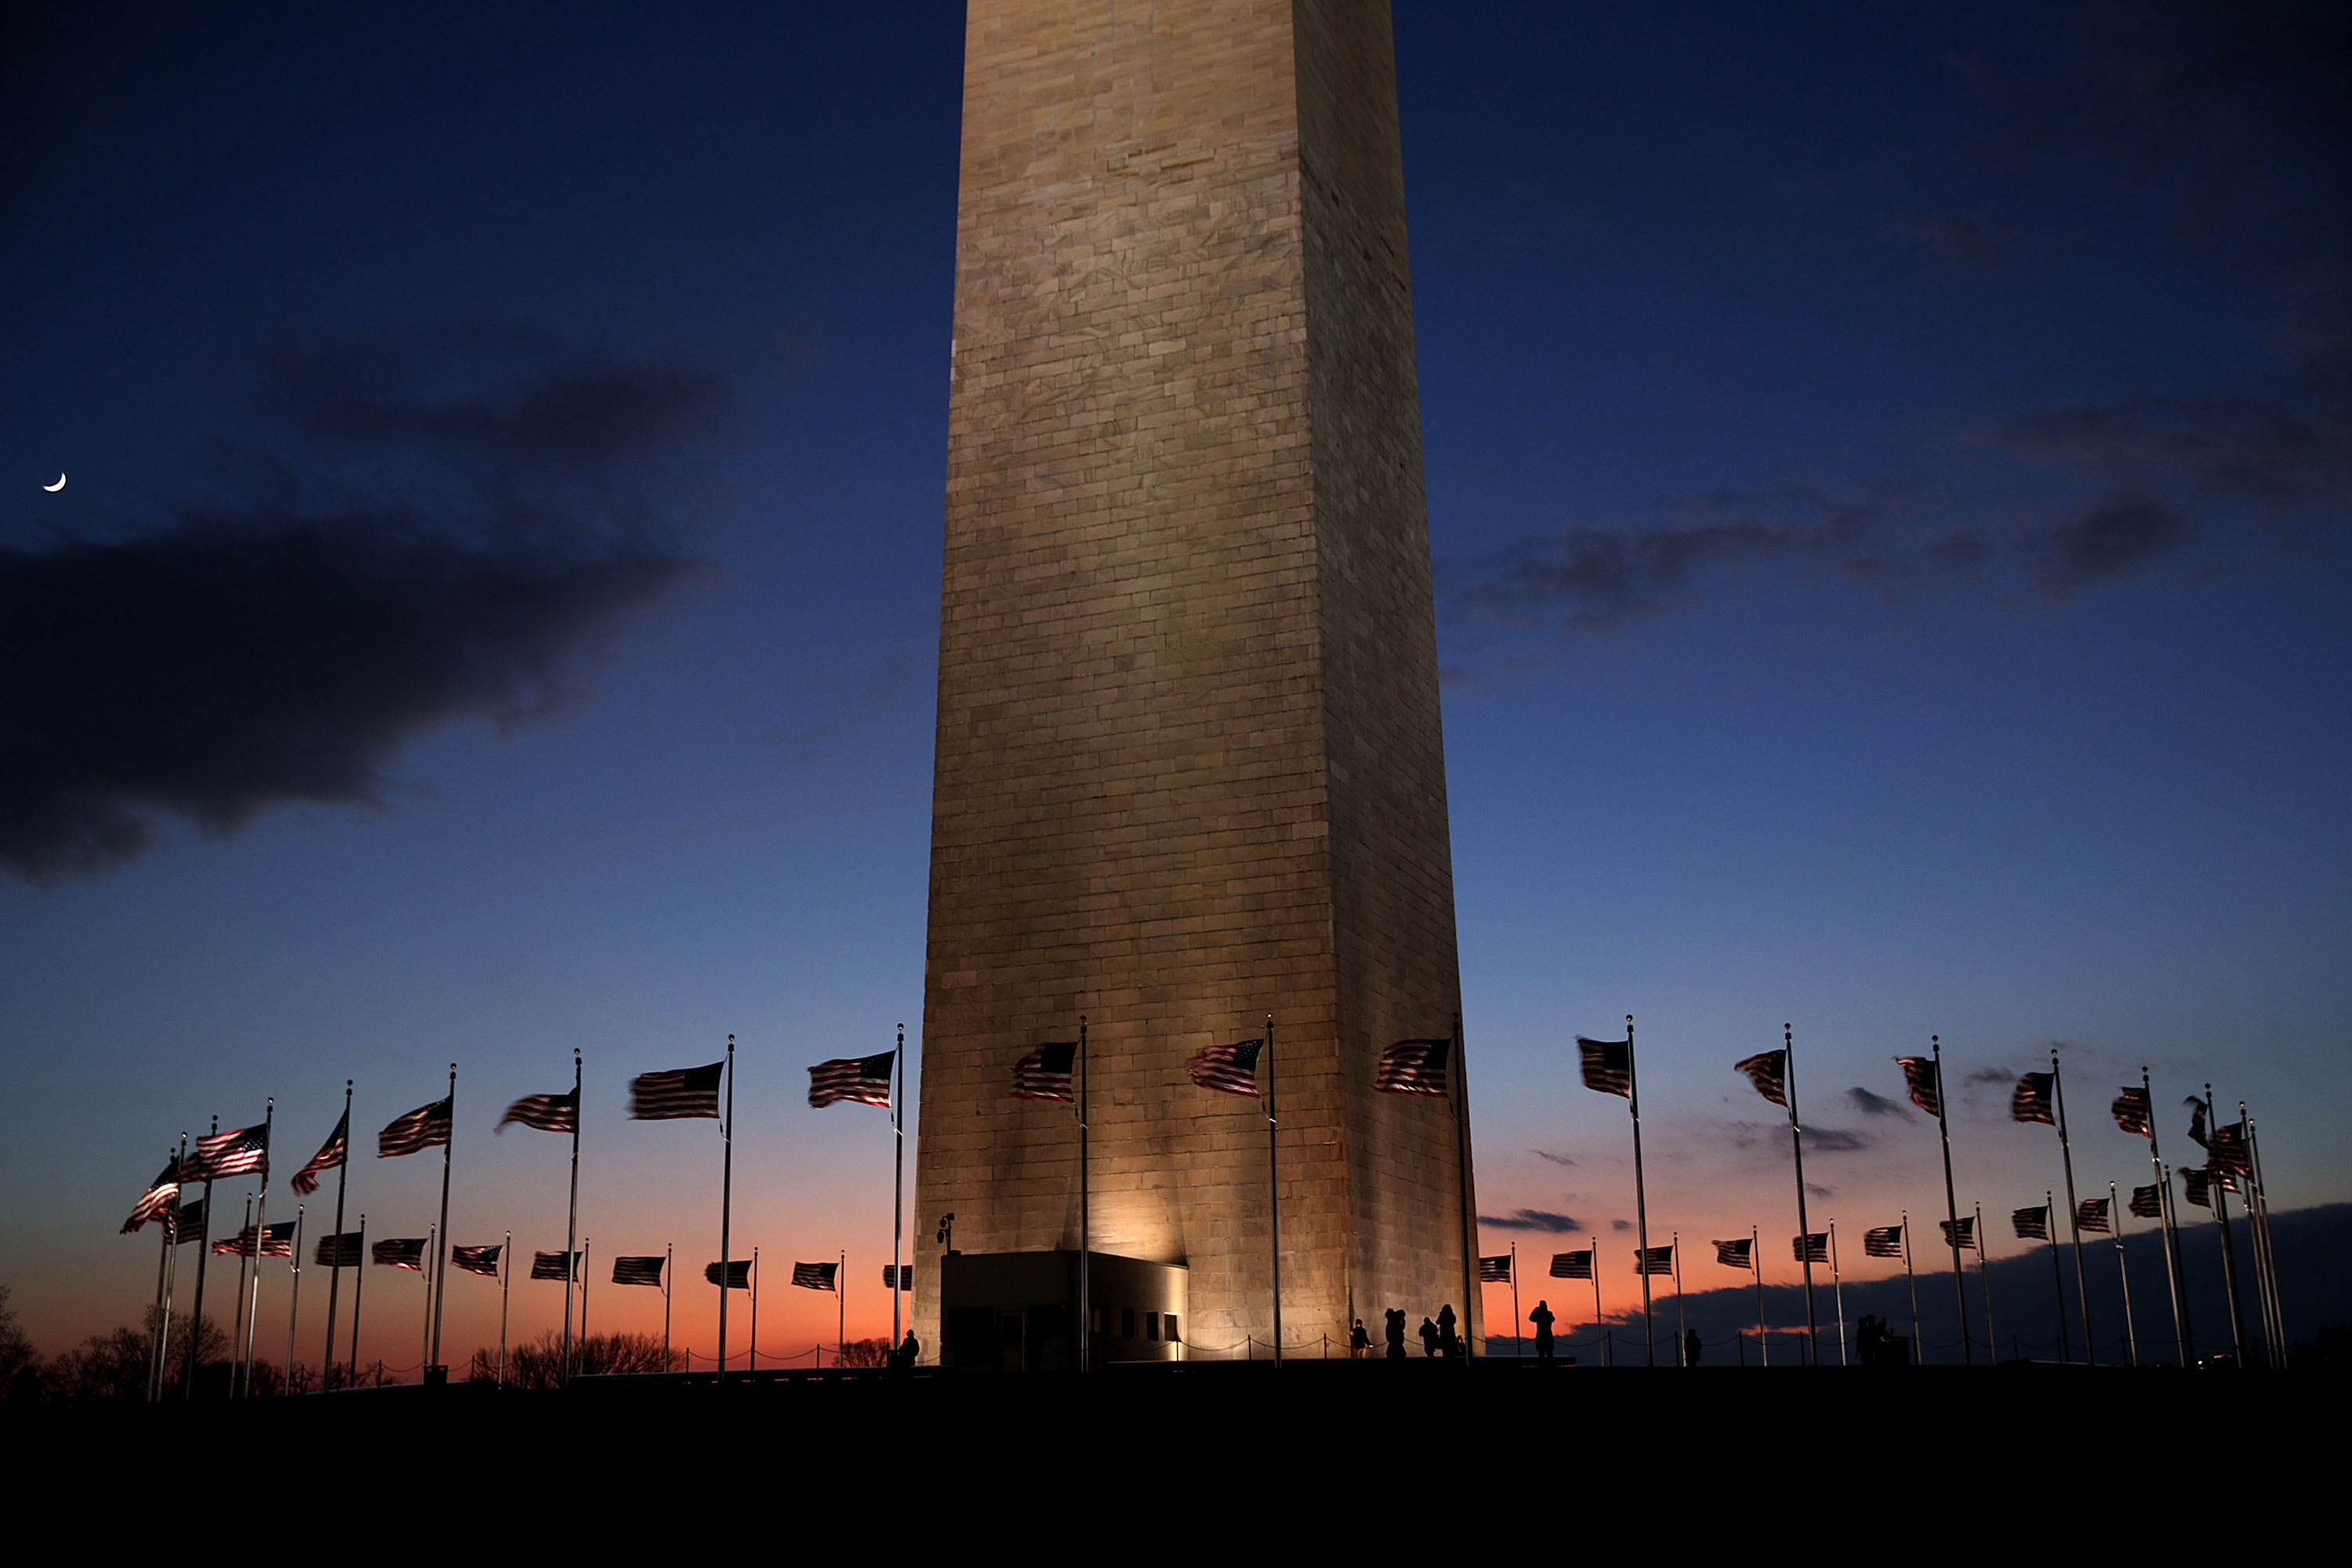 Washington Monument goes dark, officials investigate